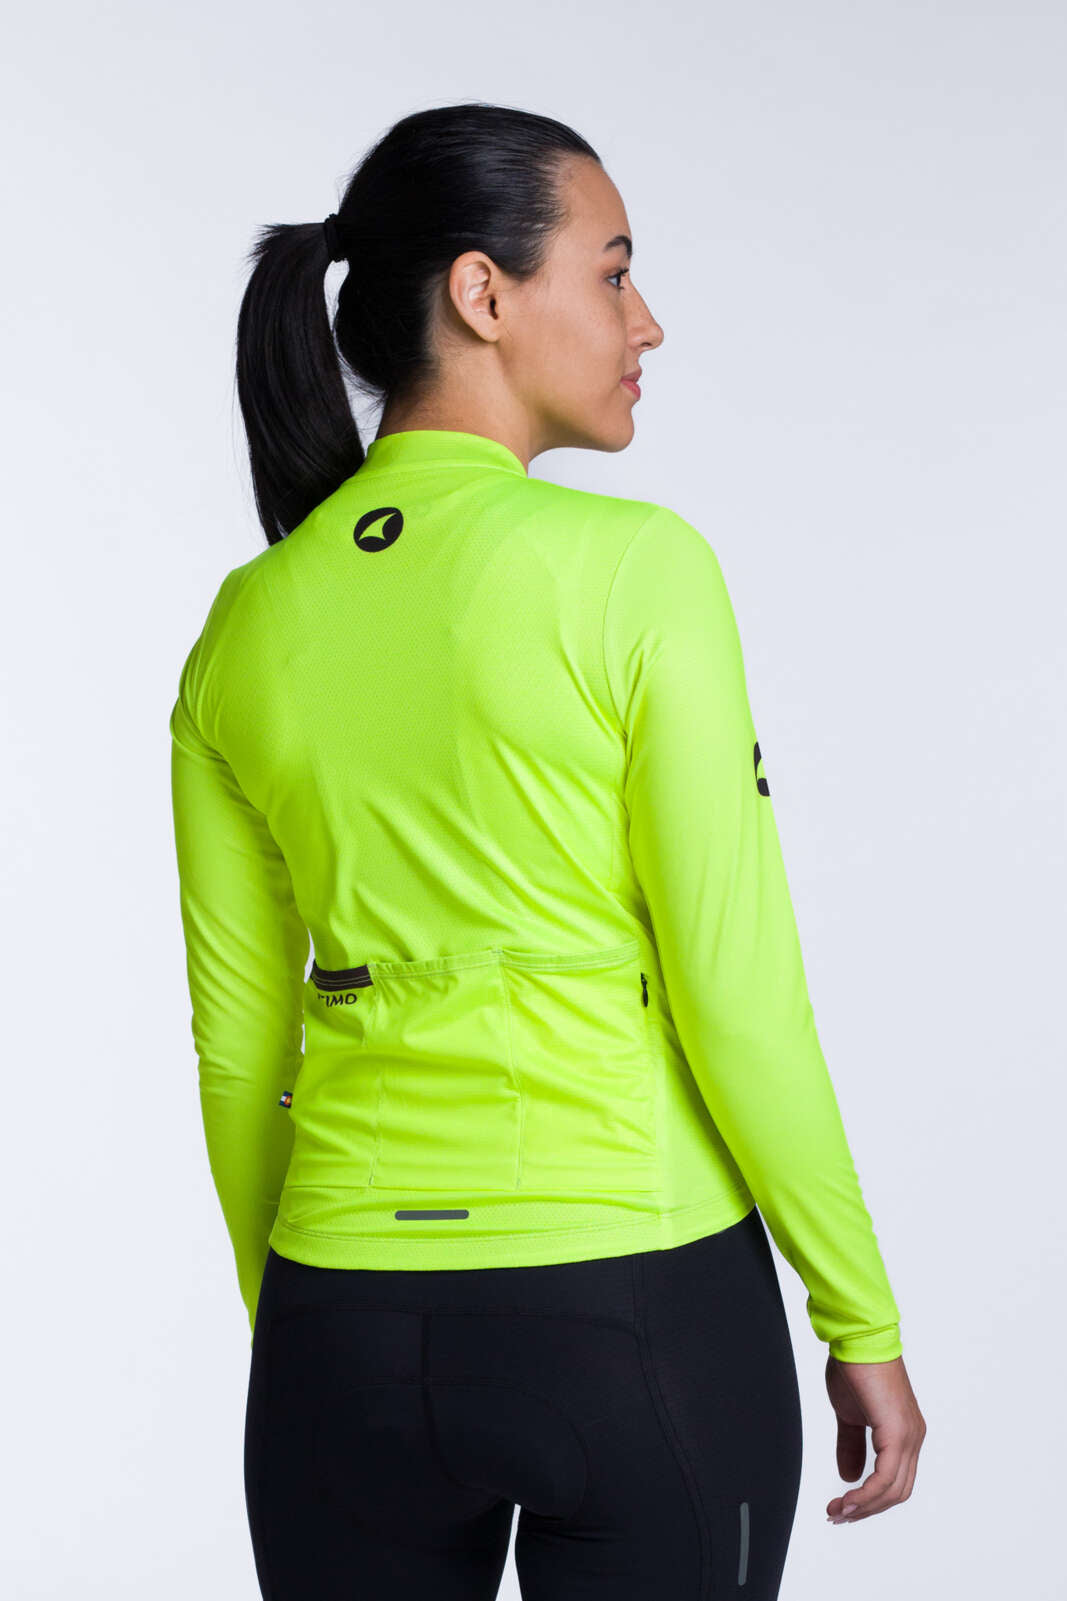 Women's High-Viz Yellow Long Sleeve Cycling Jersey - Ascent Back View